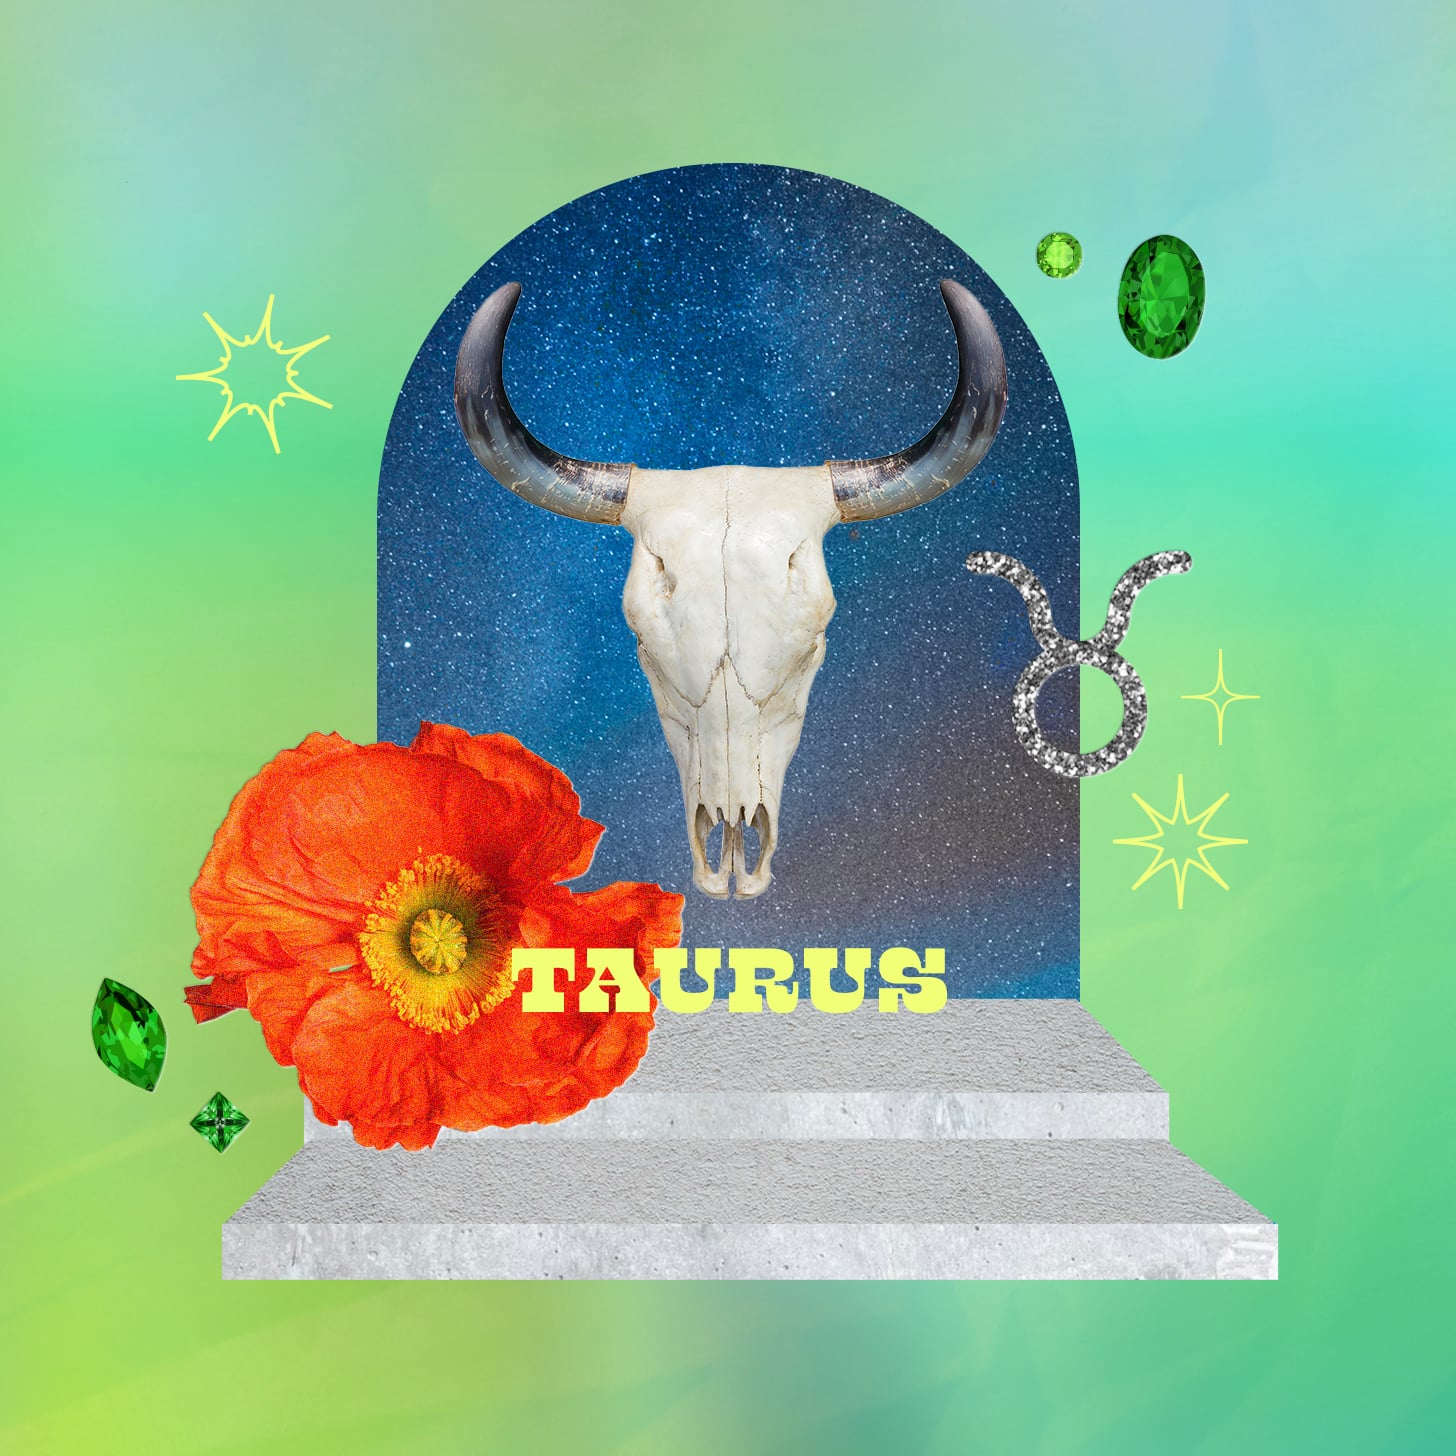 Taurus weekly horoscope for week of August 28, 2022